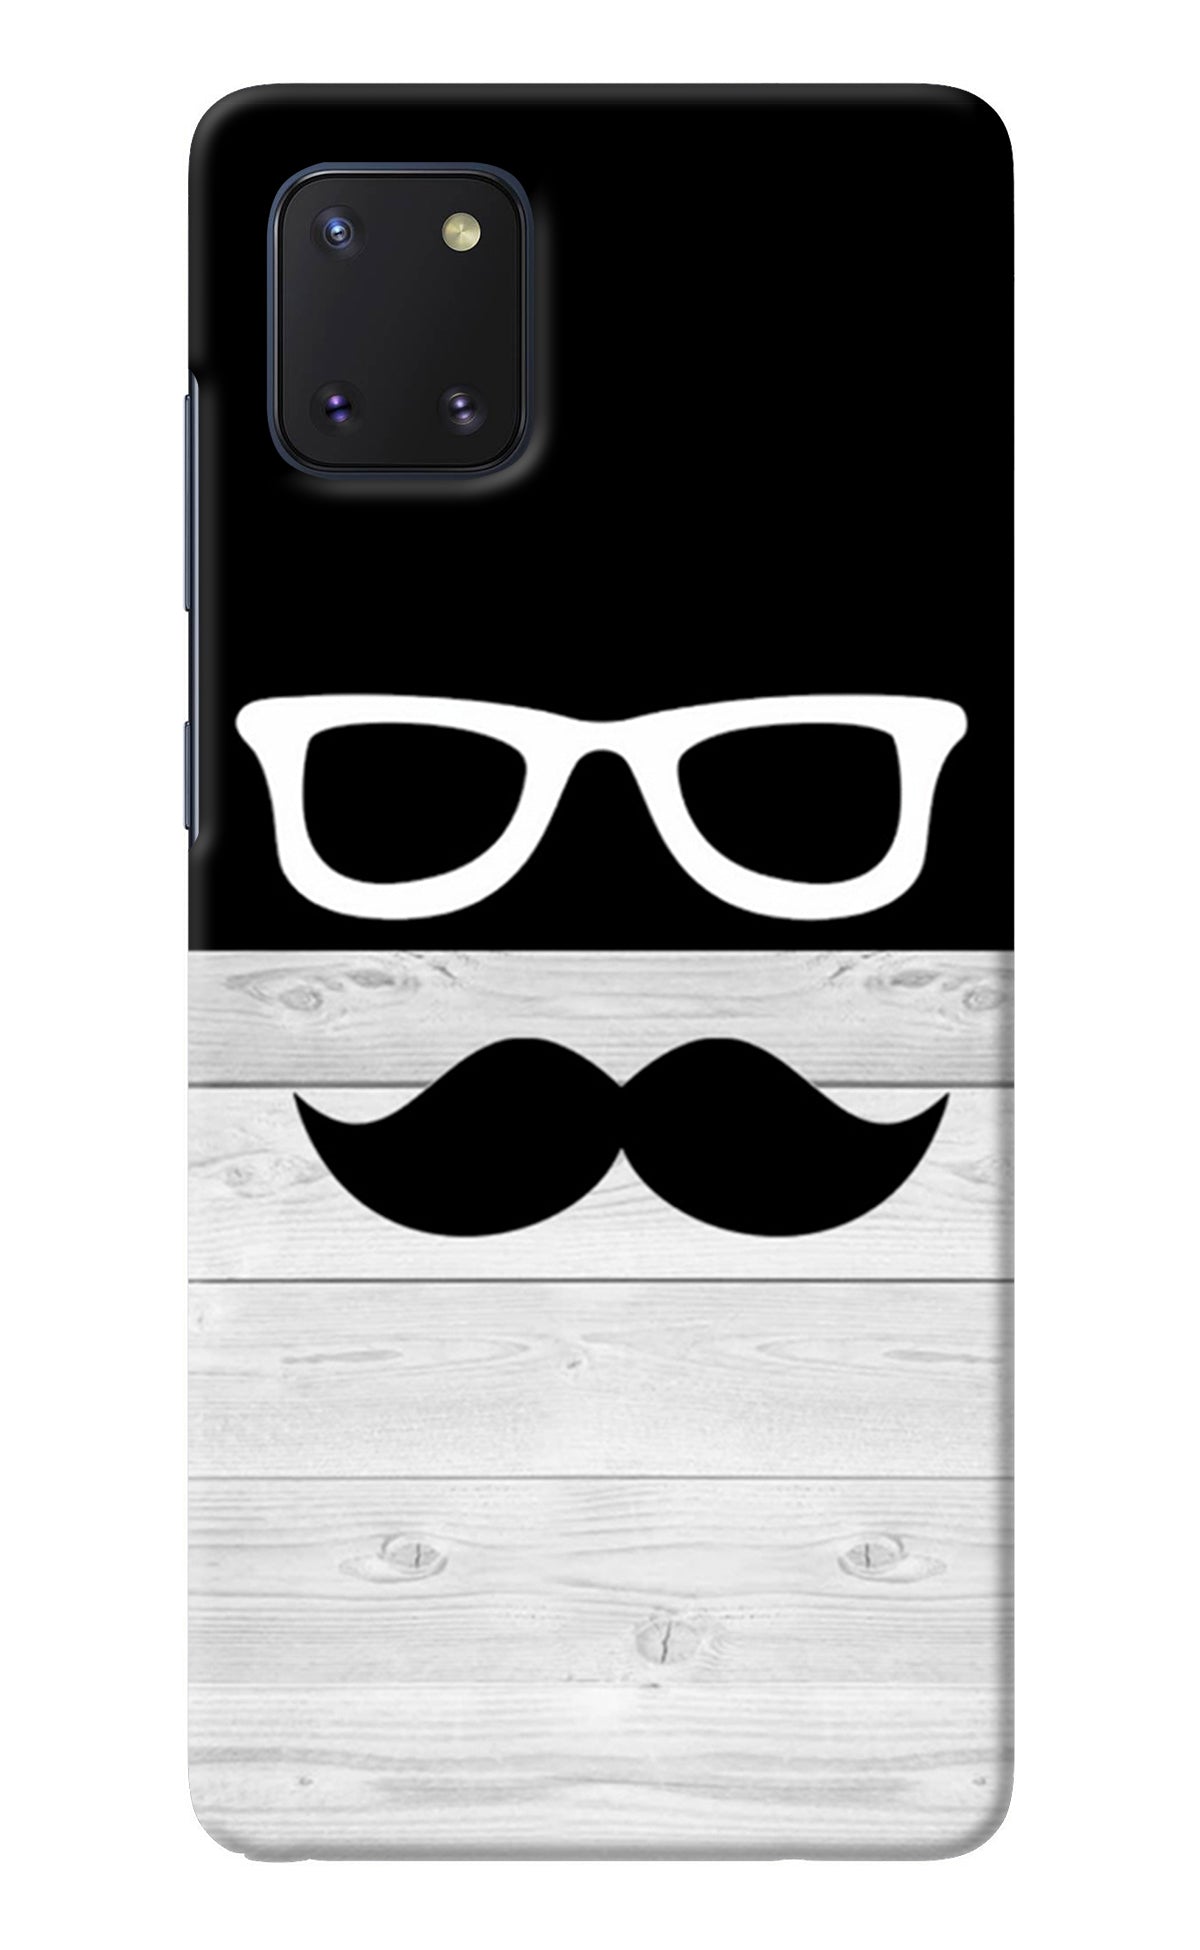 Mustache Samsung Note 10 Lite Back Cover